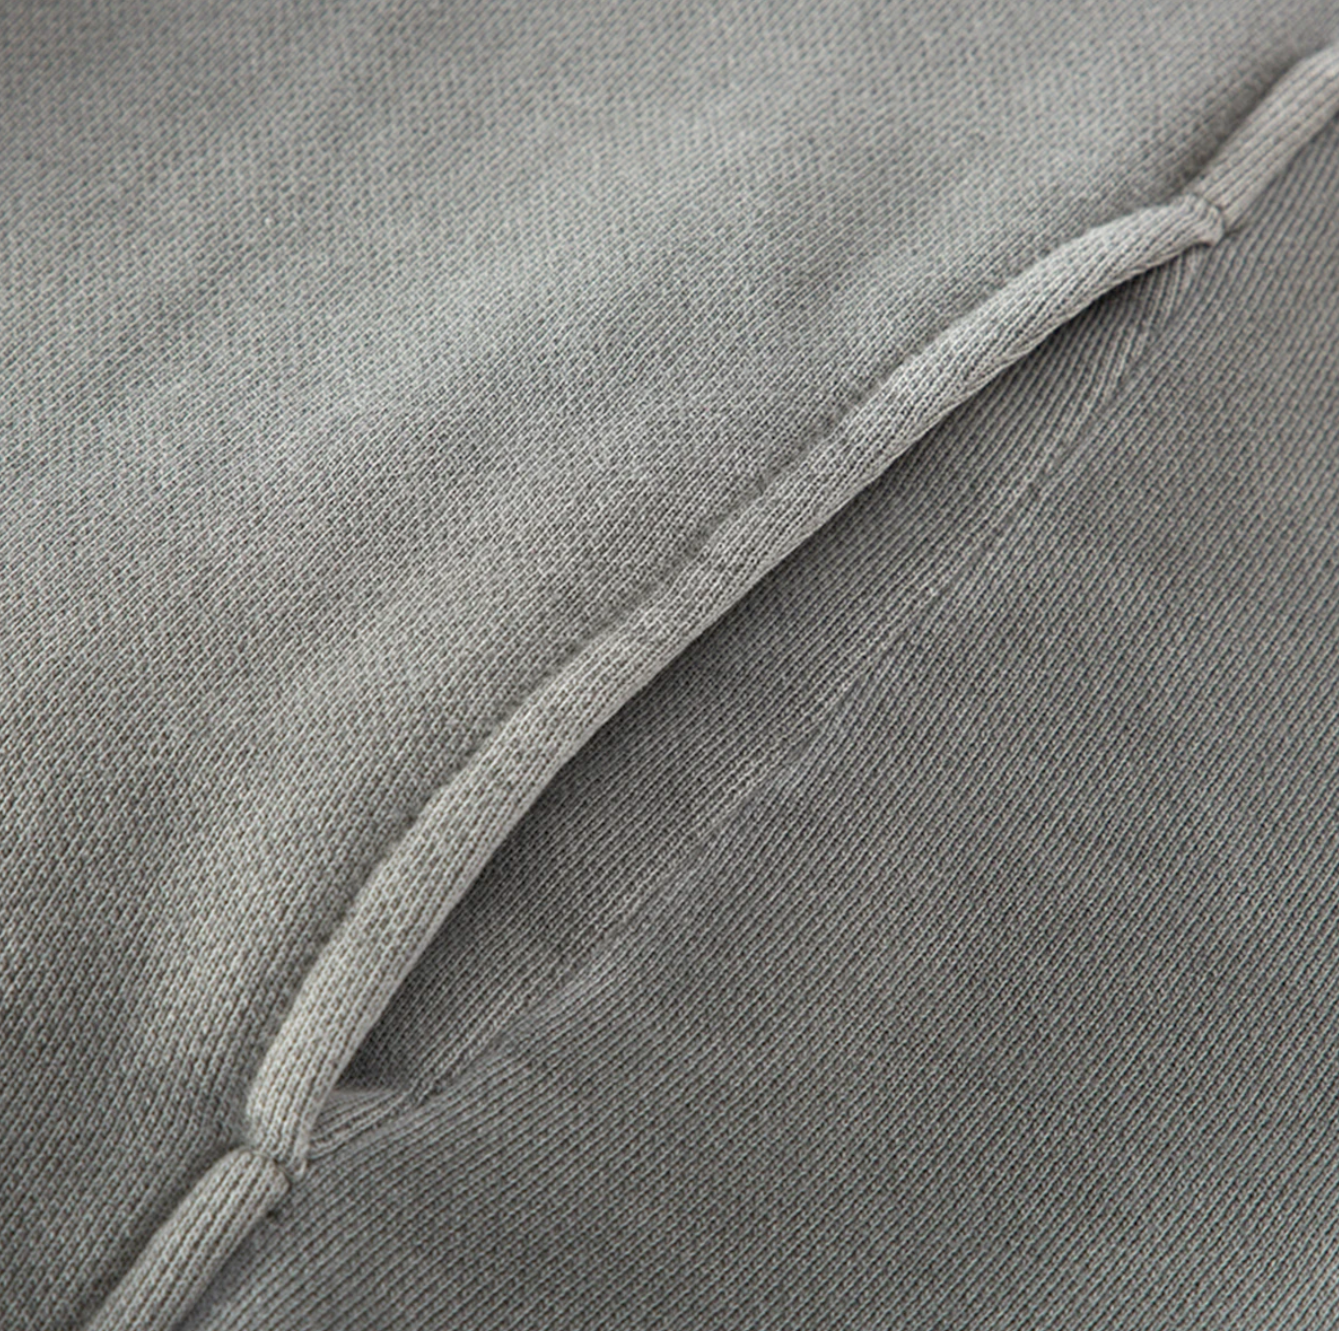 Garment fabric pocket close up